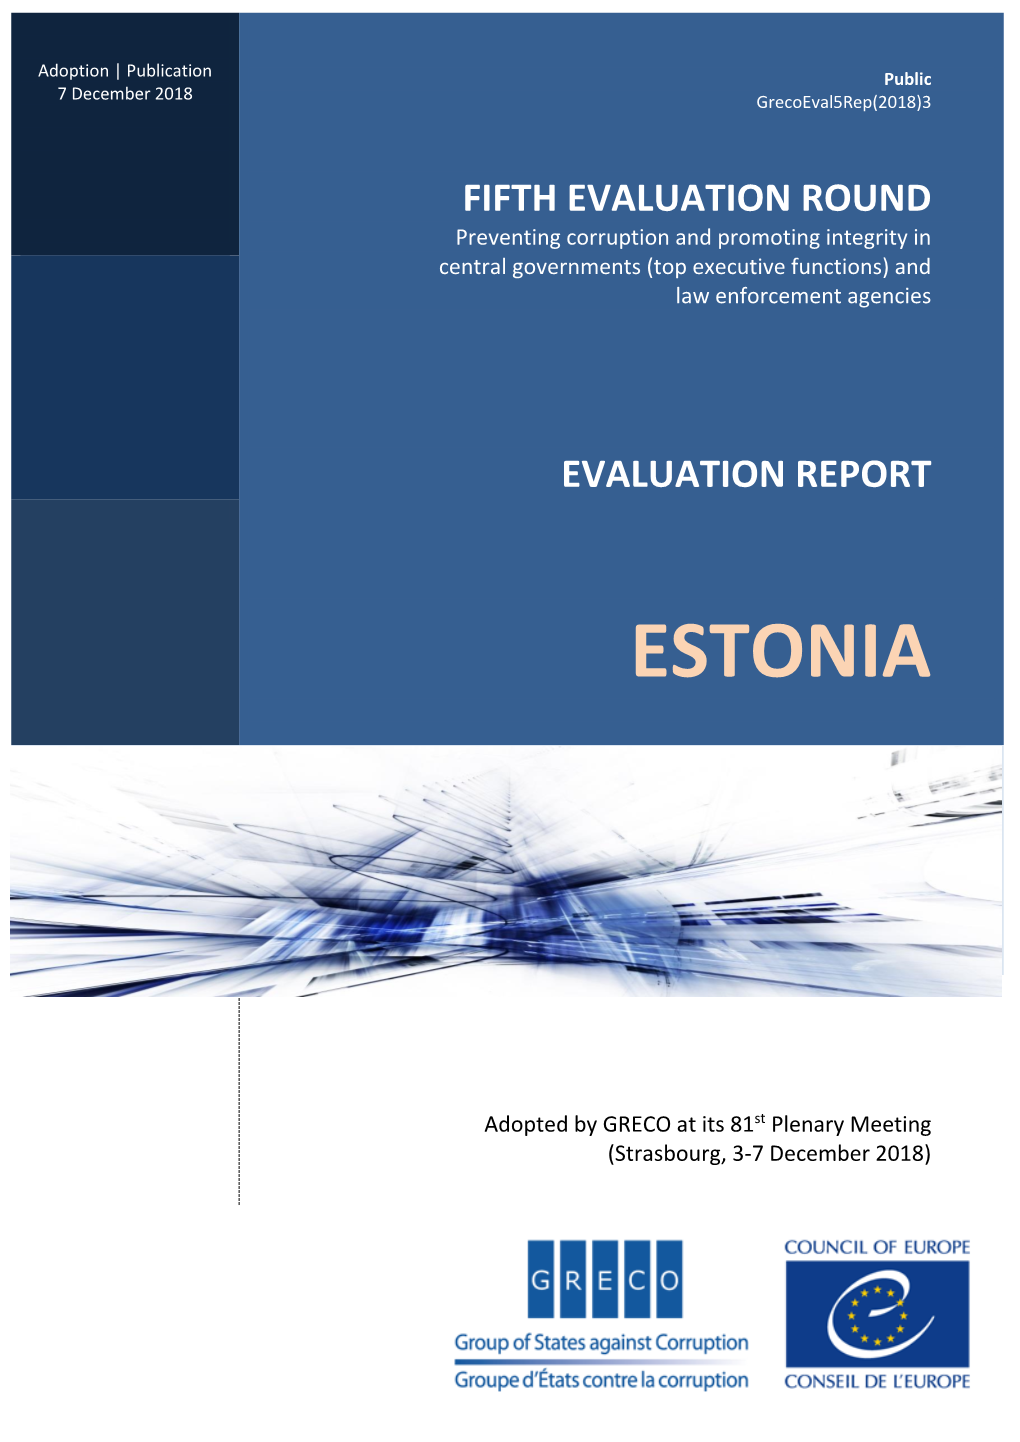 Fifth Round Evaluation Report on Estonia